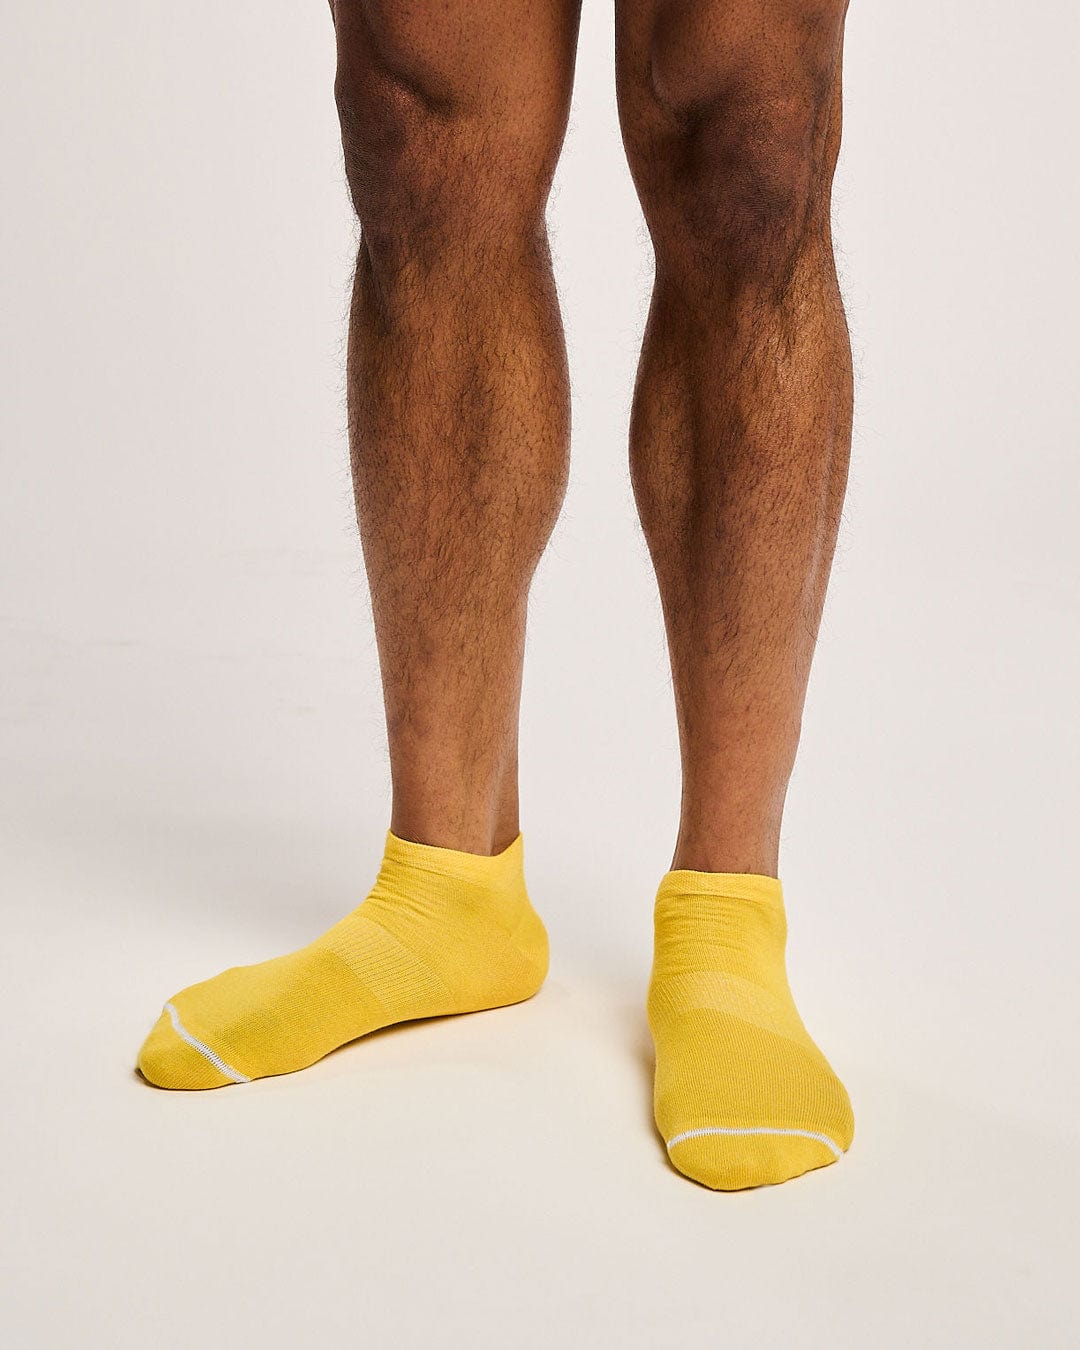 Sustainable yellow sport socks. Mens running socks